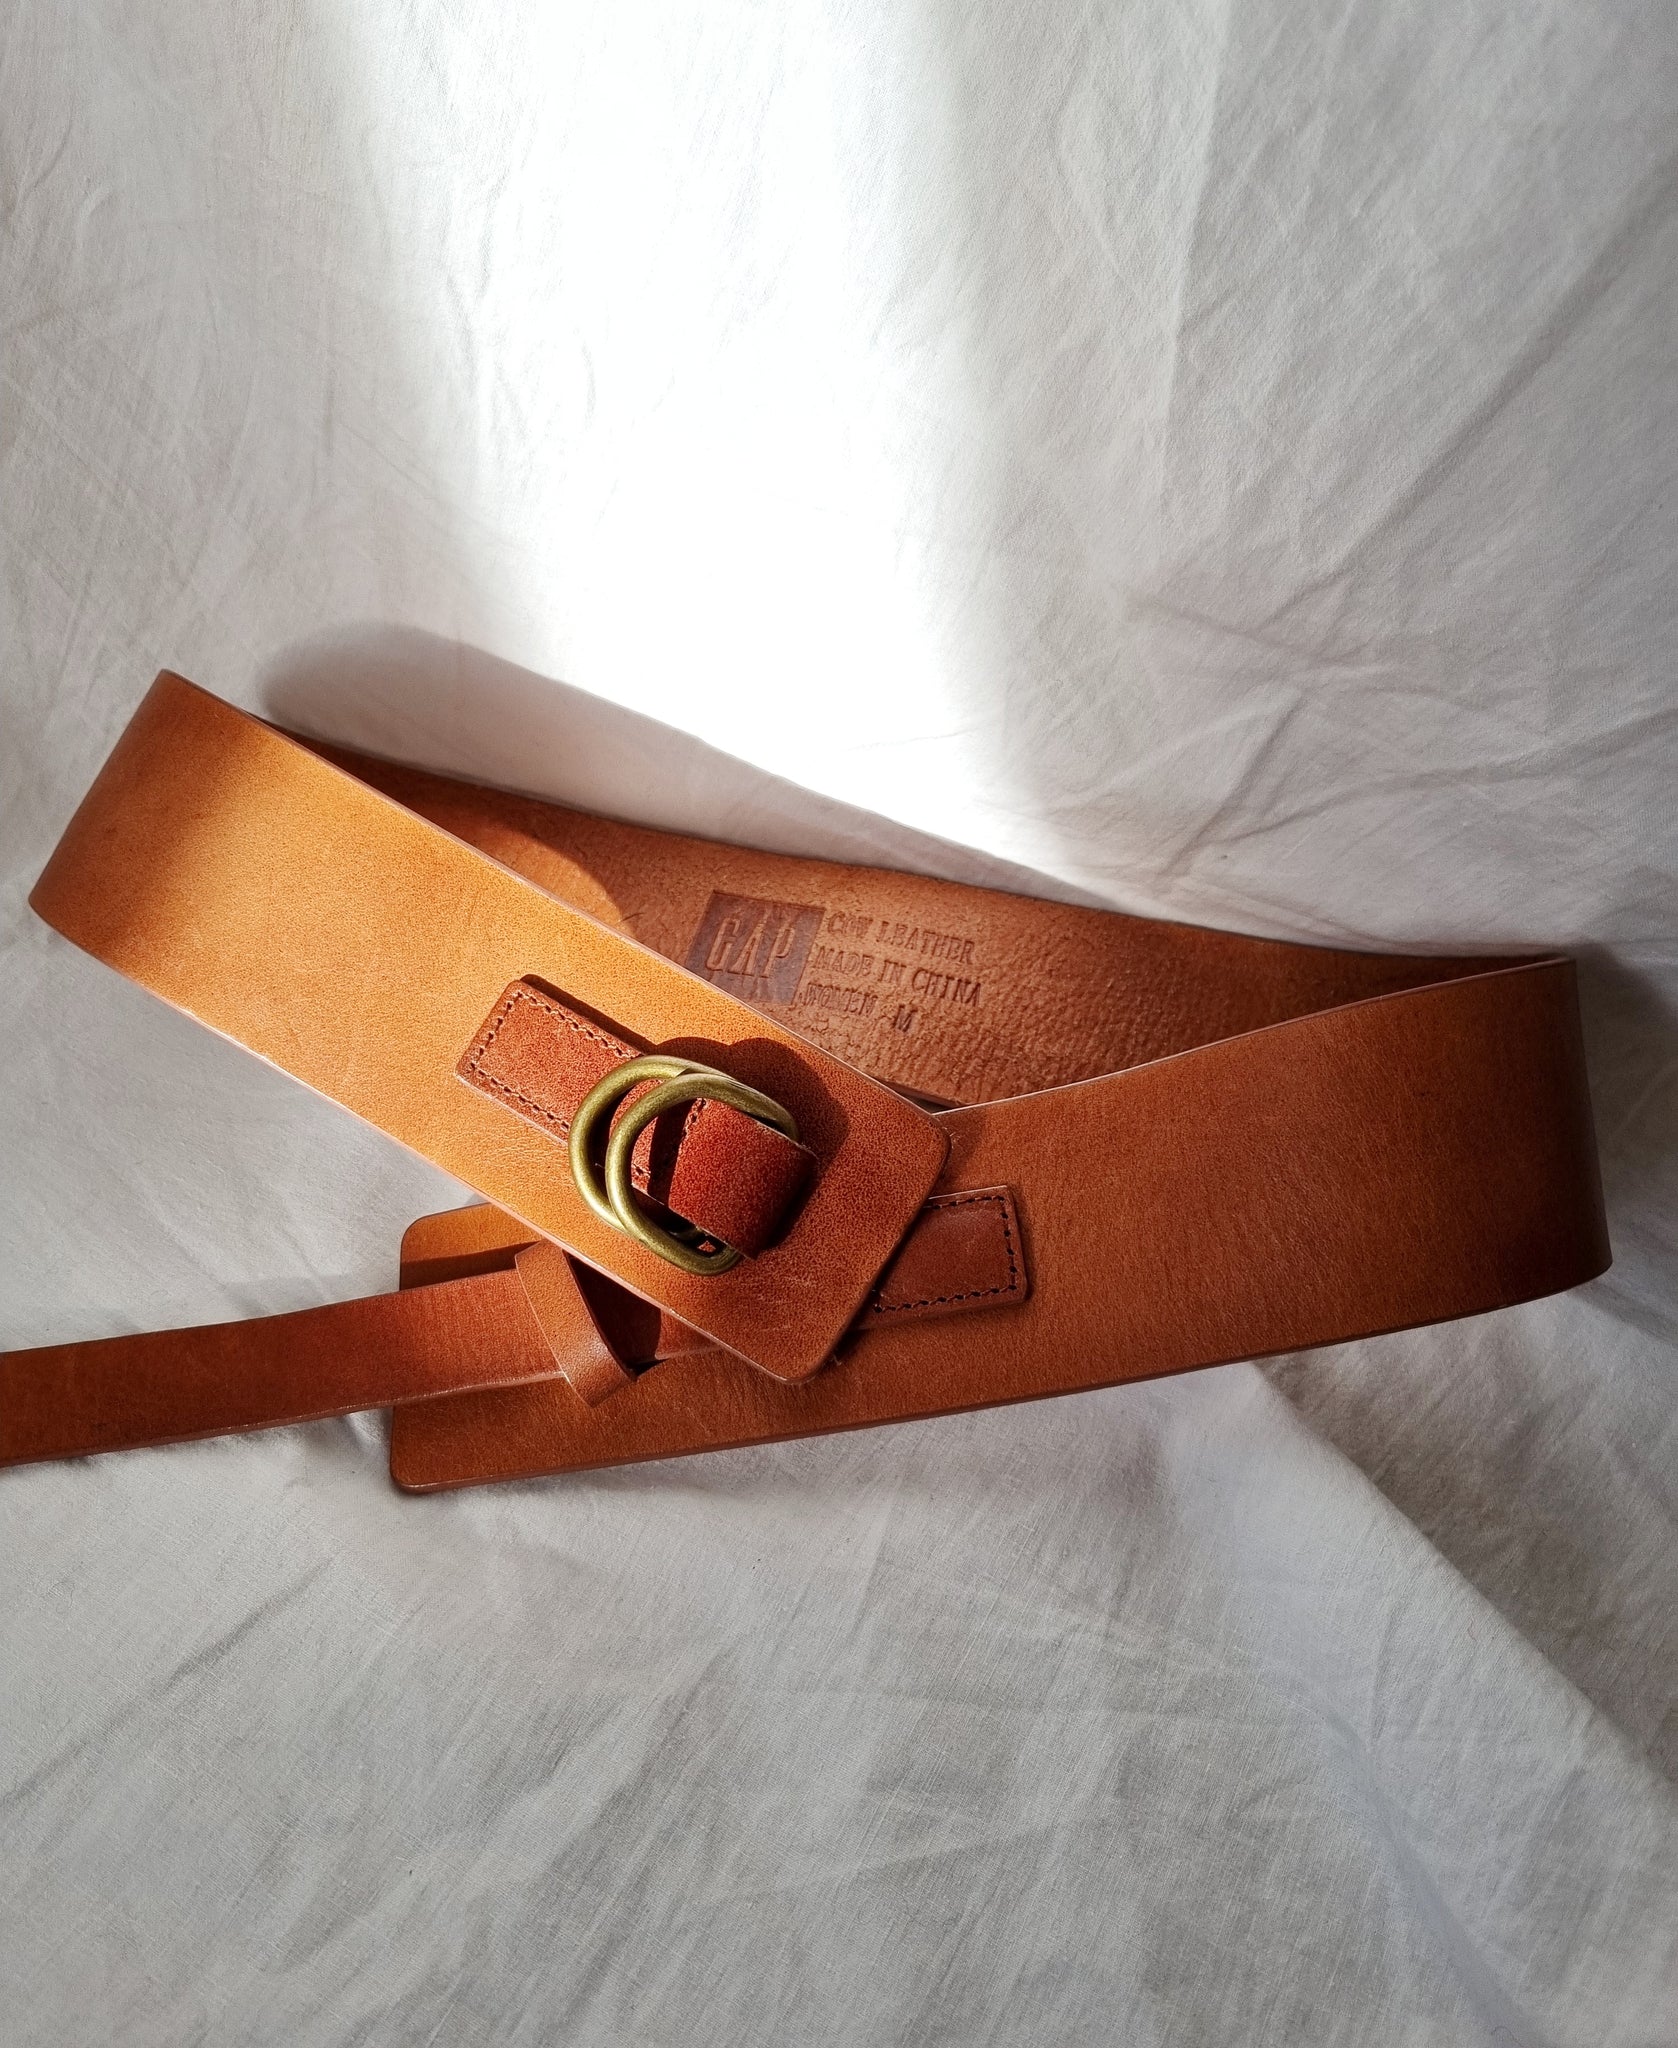 Gap Leather Waist Belt